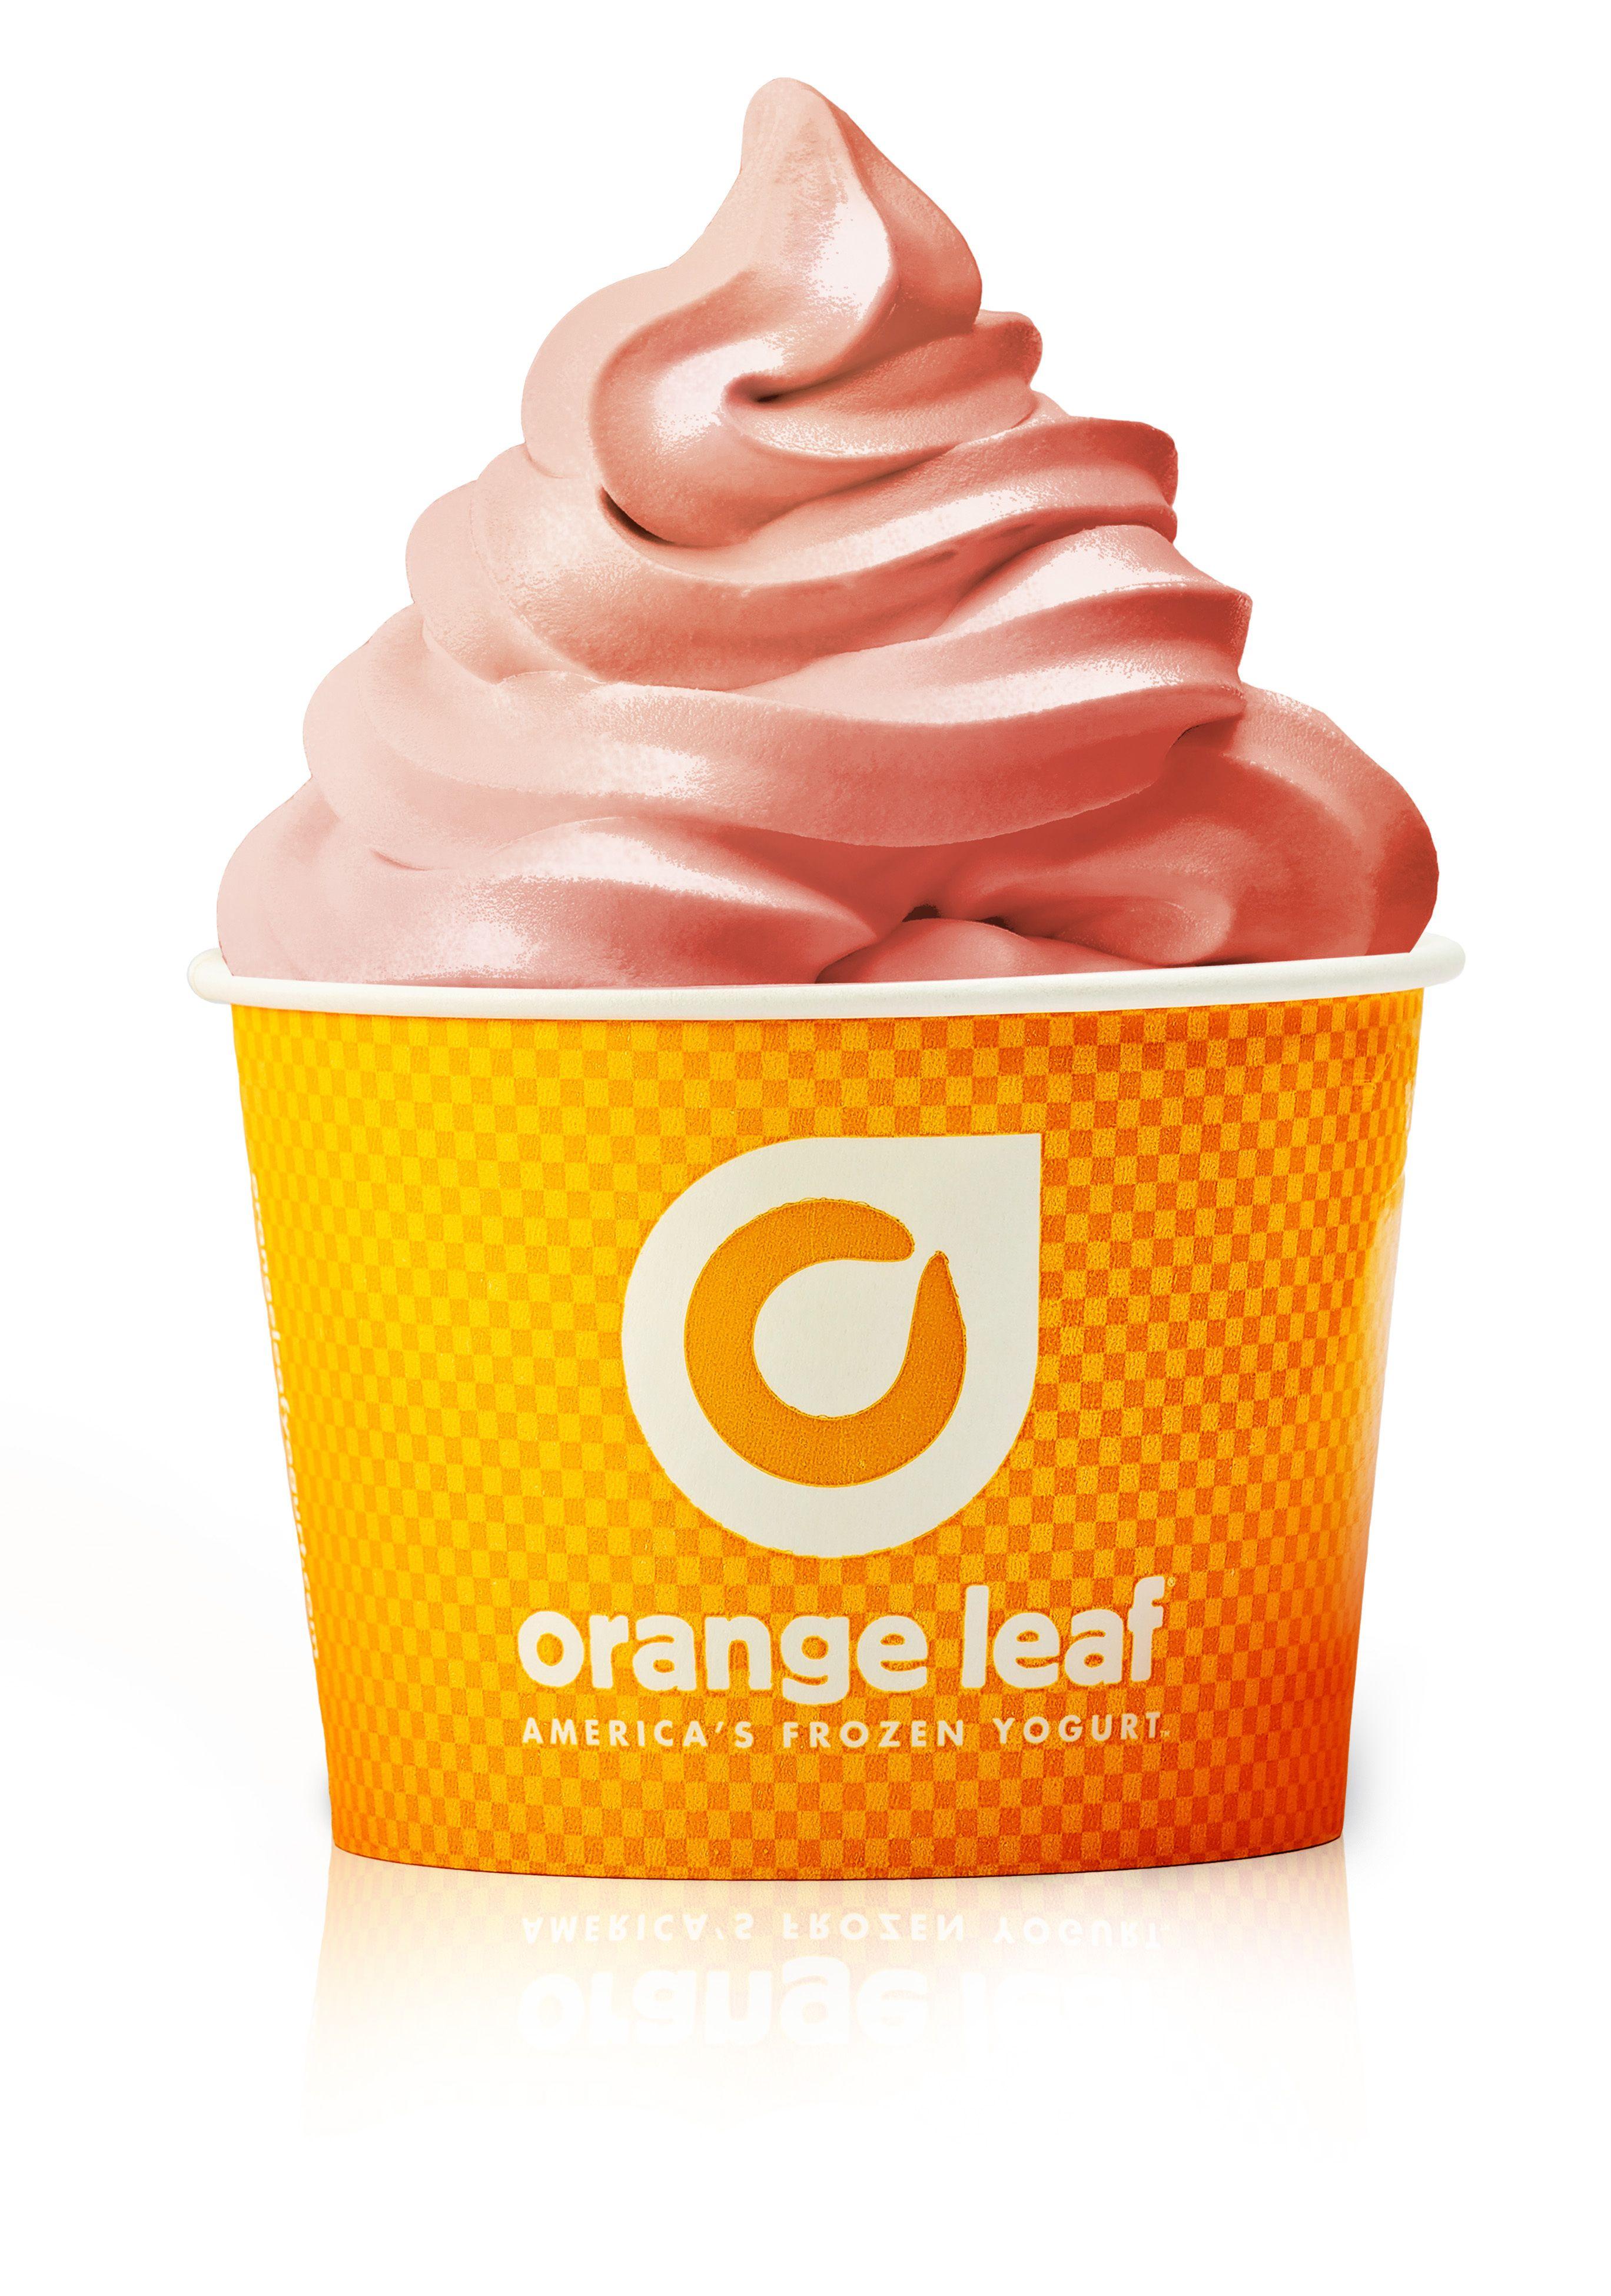 Oragne Leaf Logo - Orange Leaf Frozen Yogurt Introduces New Dairy Free Pink Lemonade ...